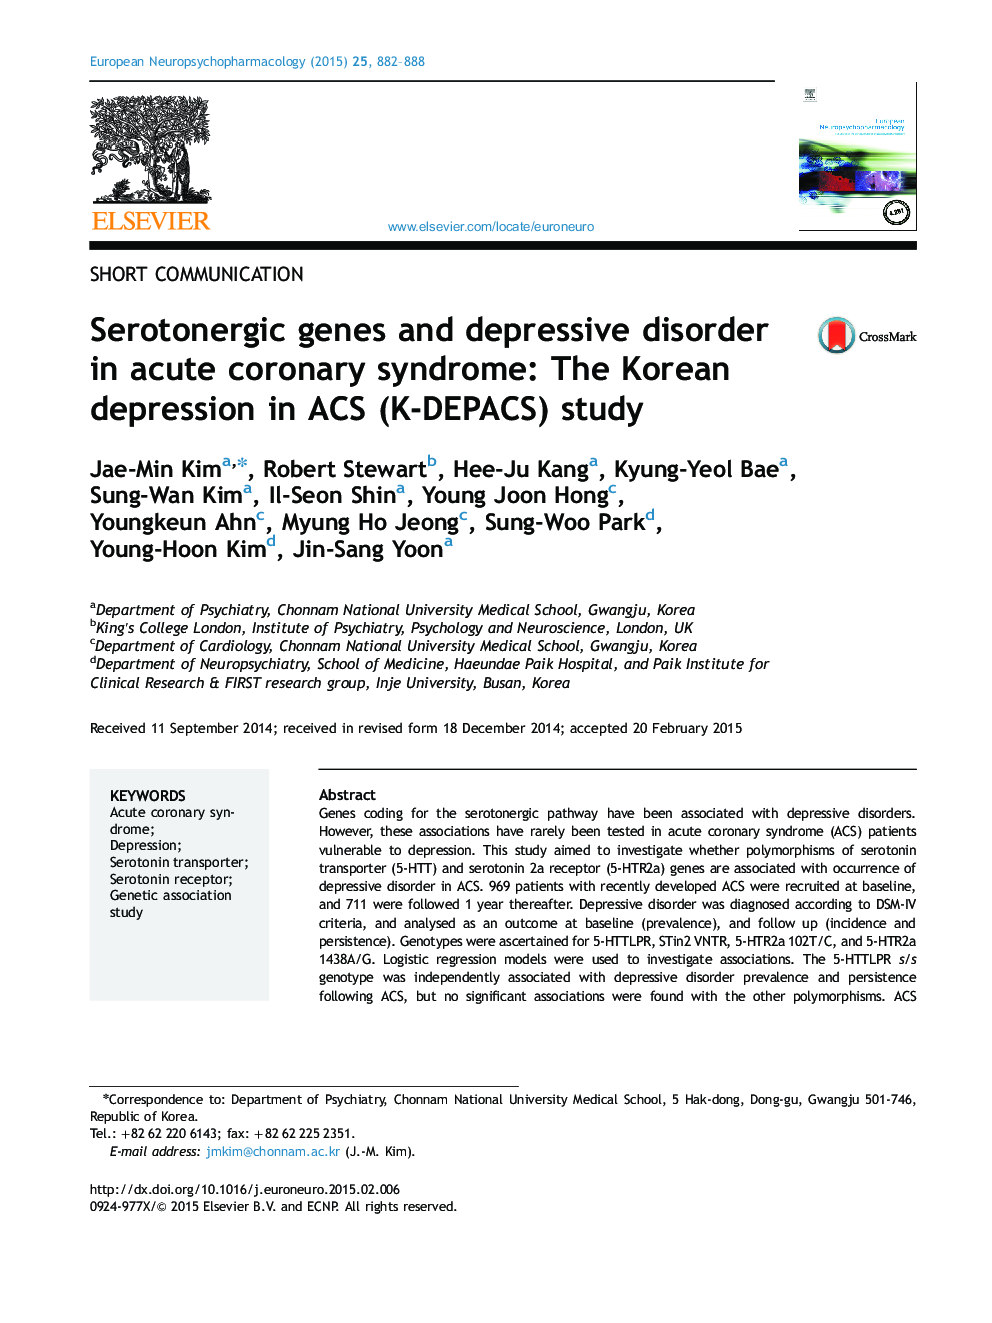 Serotonergic genes and depressive disorder in acute coronary syndrome: The Korean depression in ACS (K-DEPACS) study